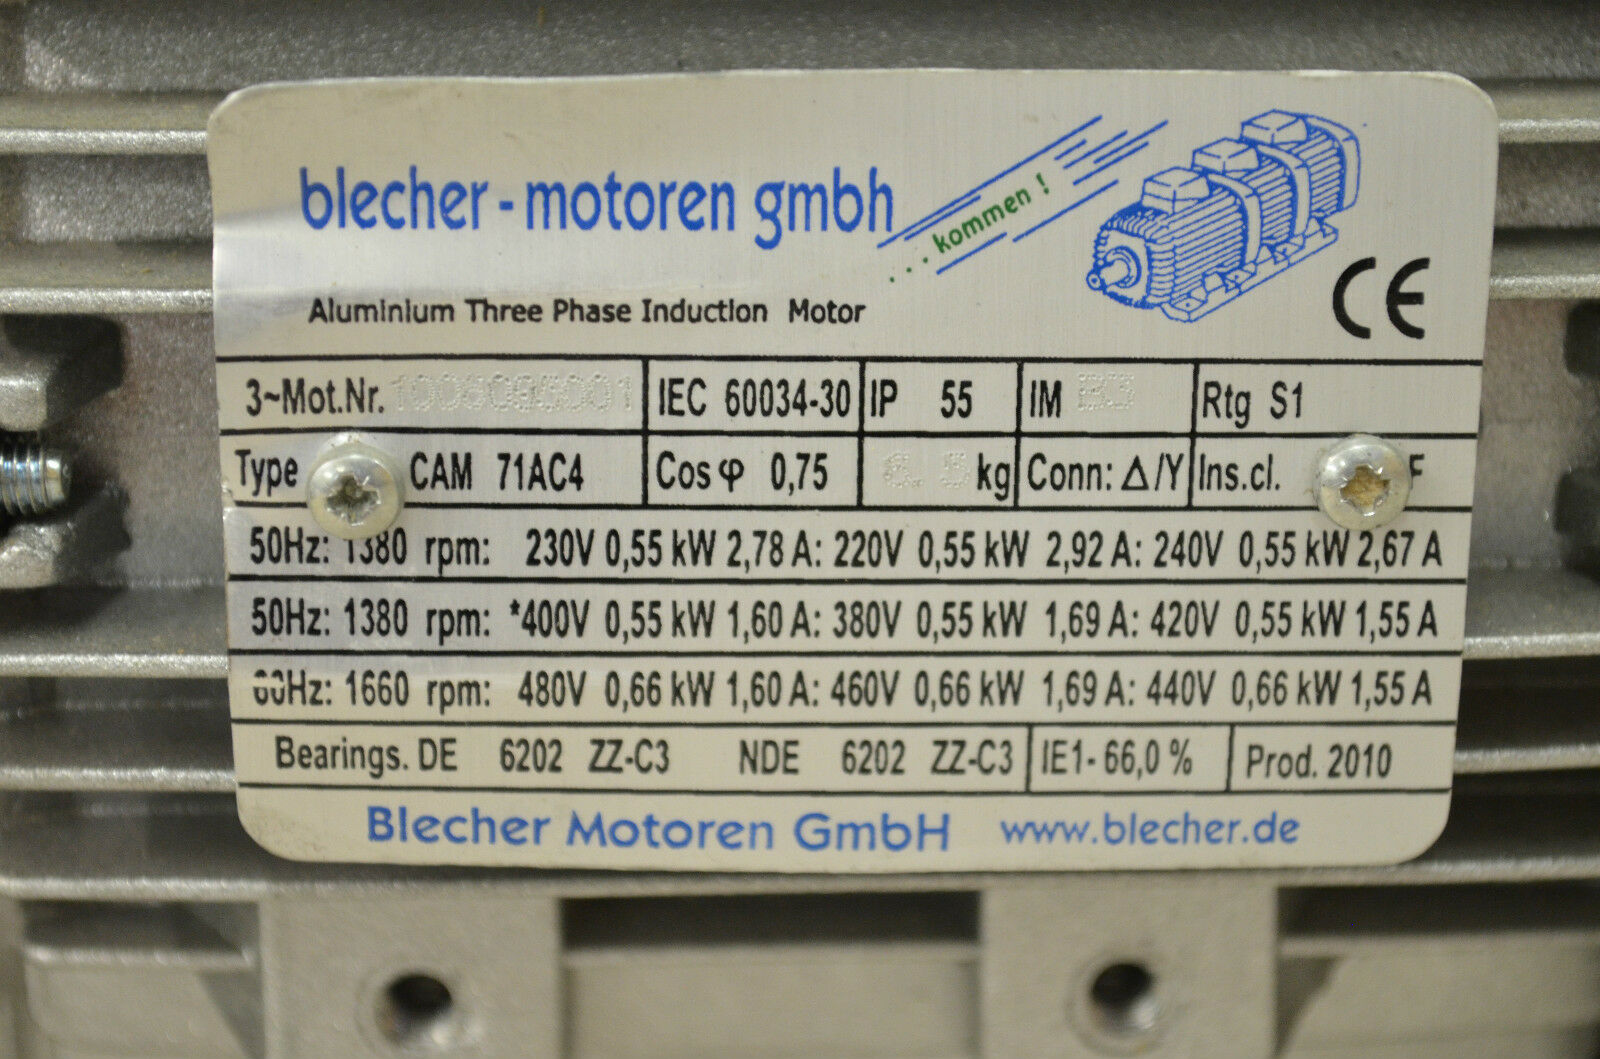 BLECHER SpeedMec凸轮71 AC4齿轮发动机0,55kW滑动驱动新 